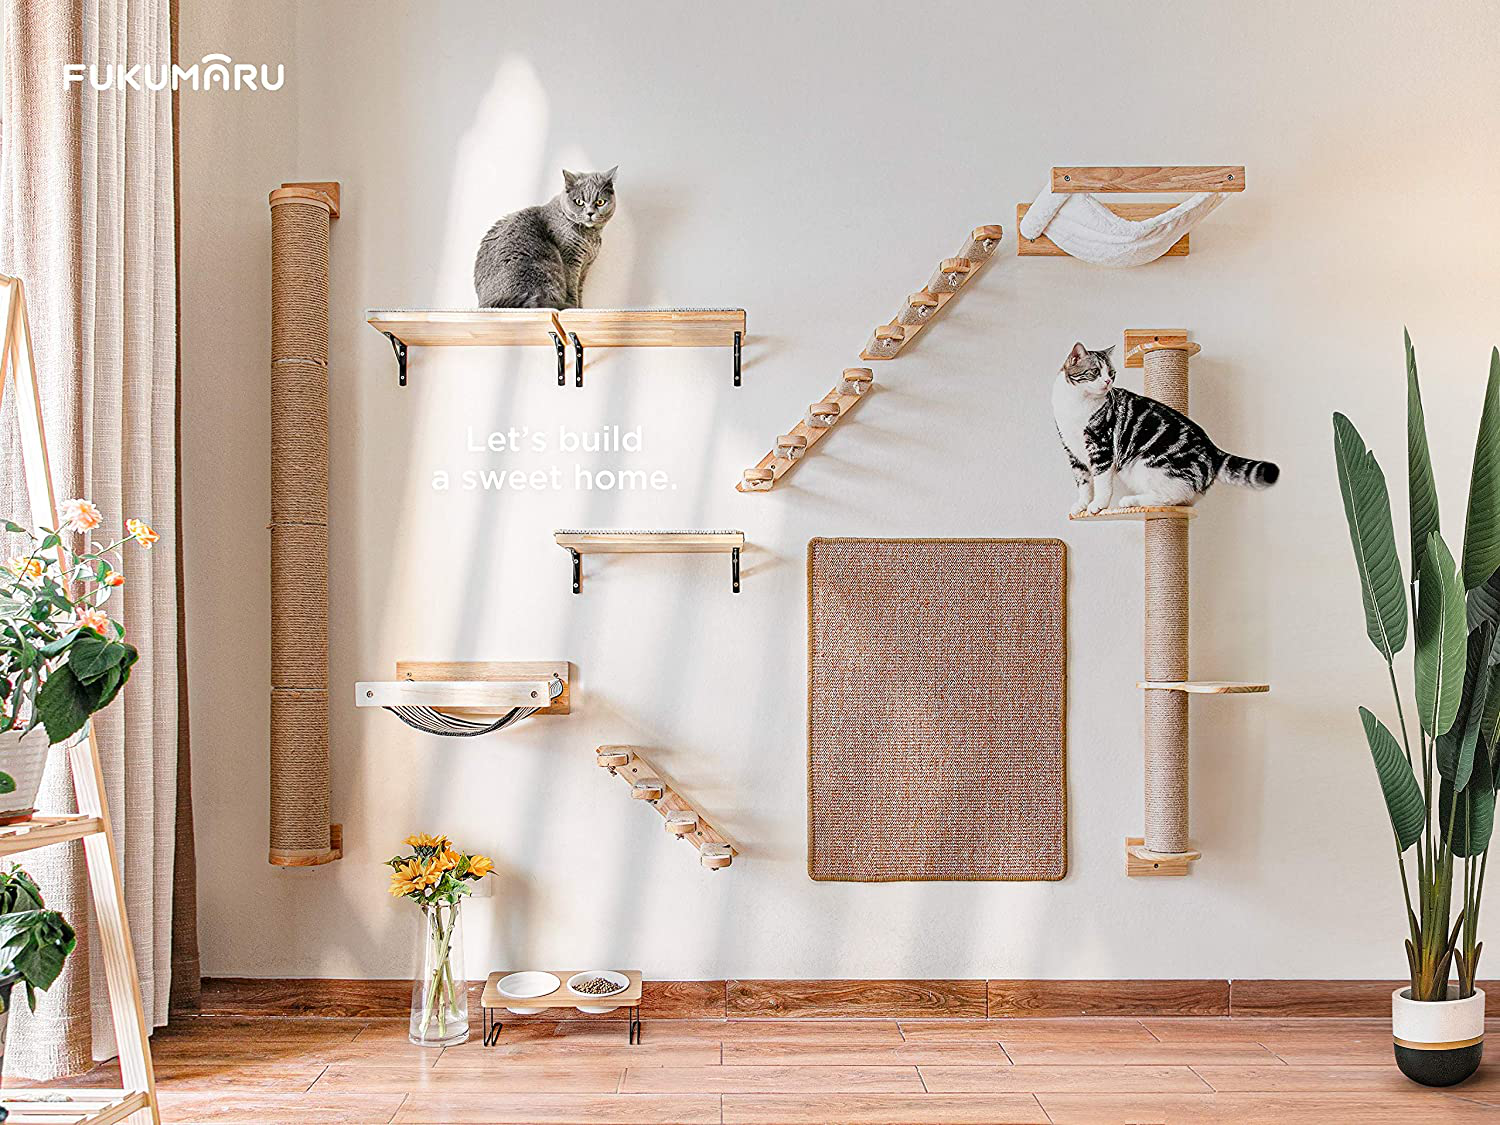 FUKUMARU Cat Climbing Shelf Wall Mounted, Four Step Cat Stairway with Jute Scratching for Cats Perch Platform Supplies